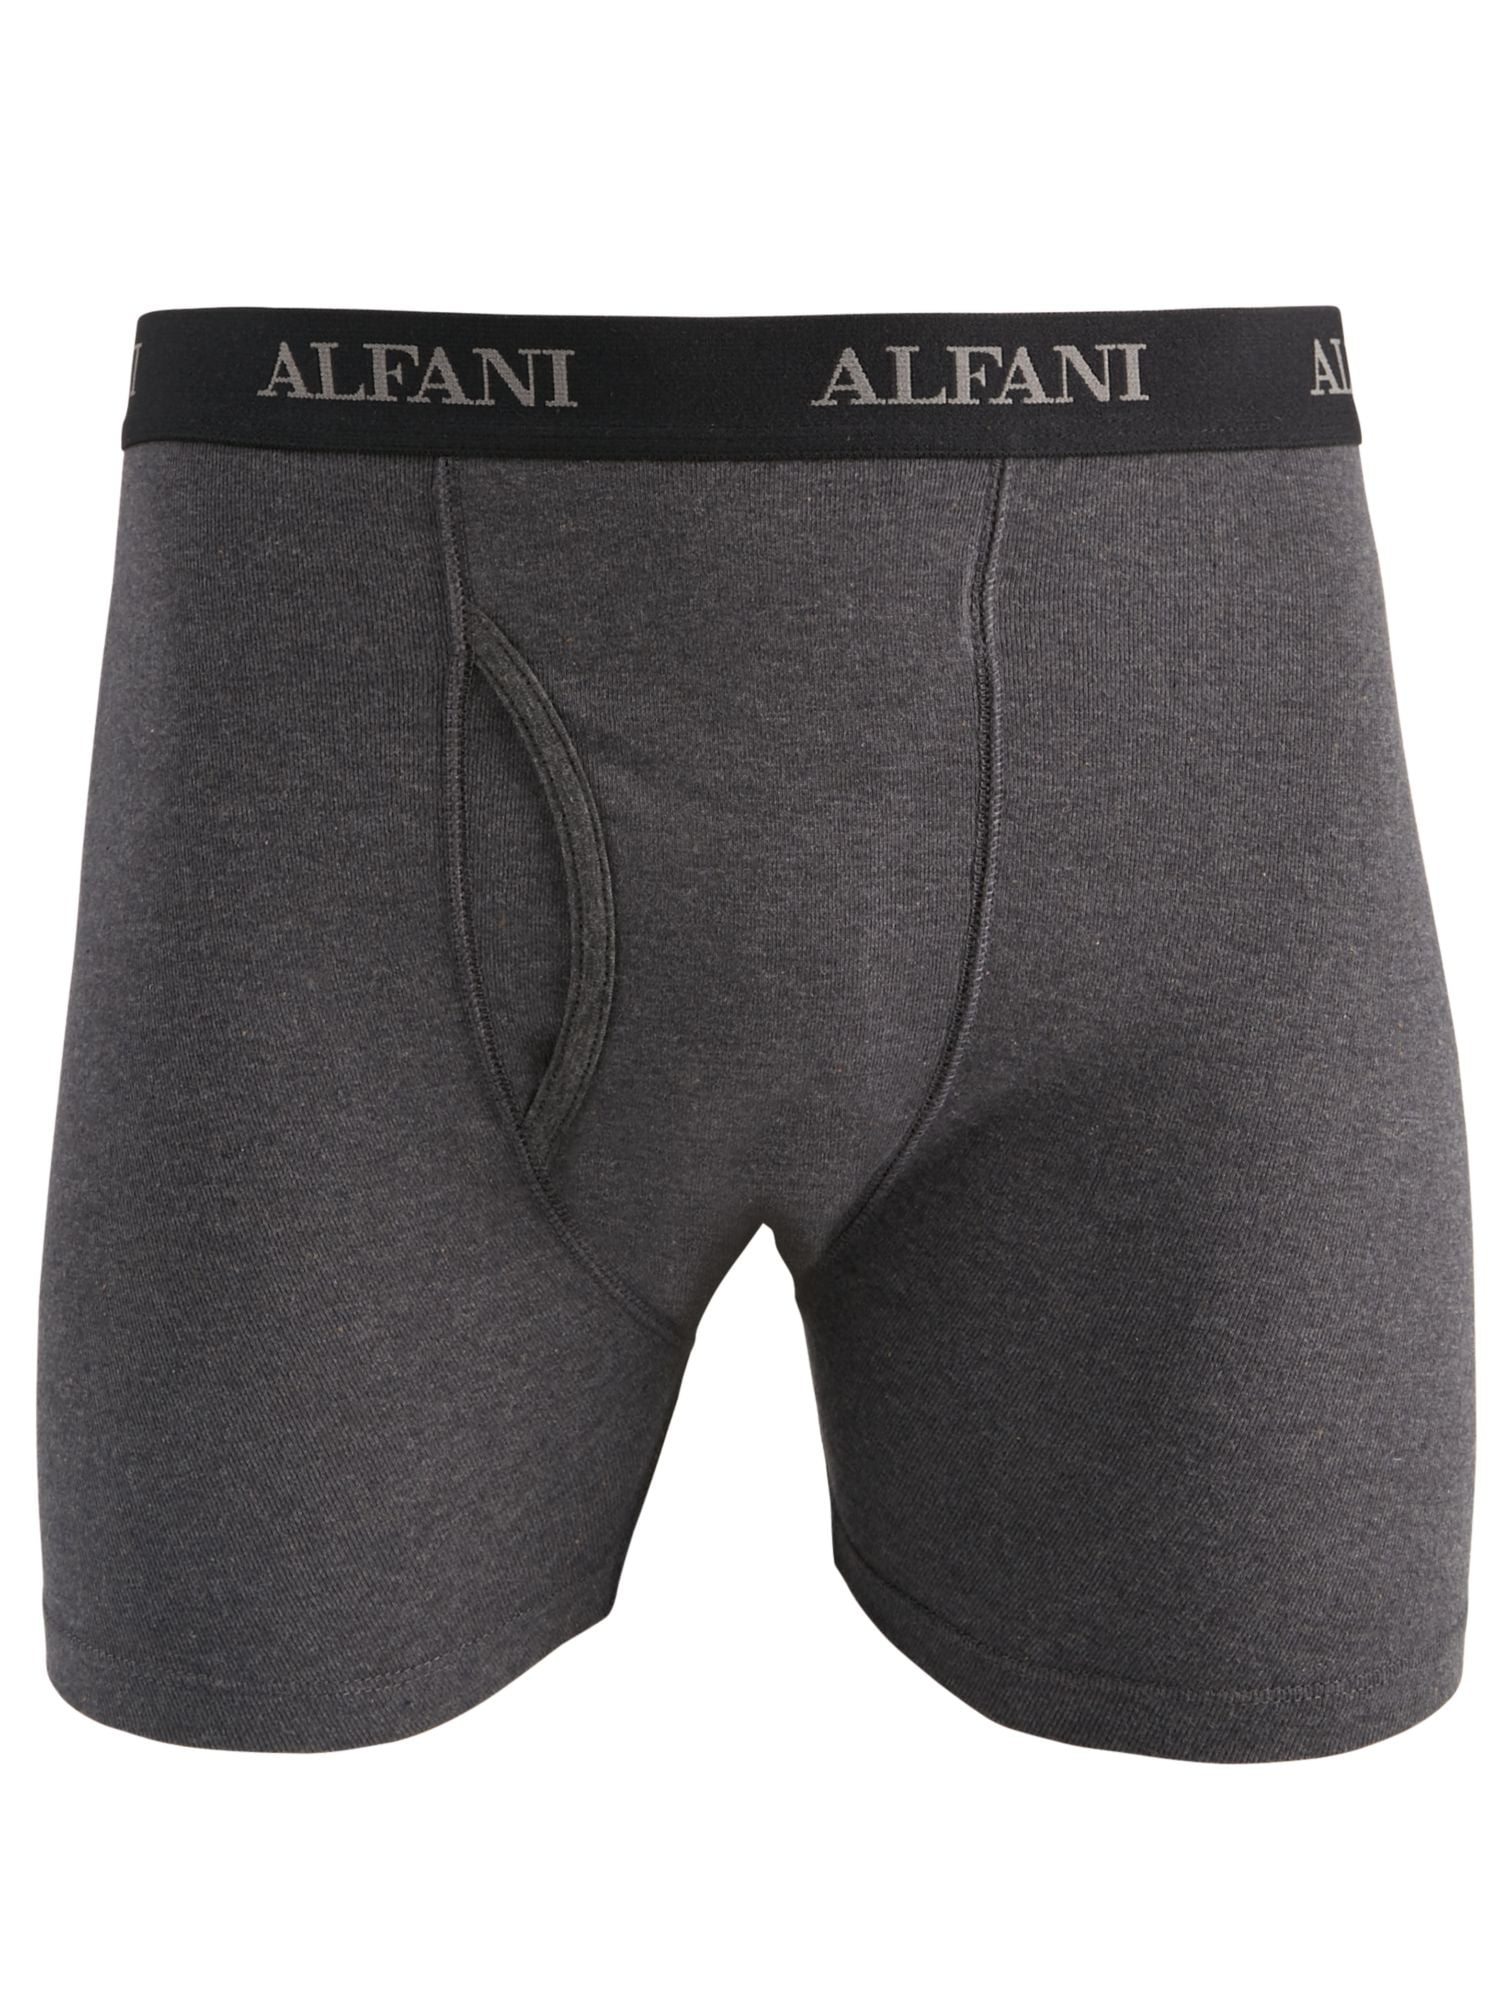 ALFATECH BY ALFANI Intimates 5 Pack Gray Boxer Brief Underwear S ...